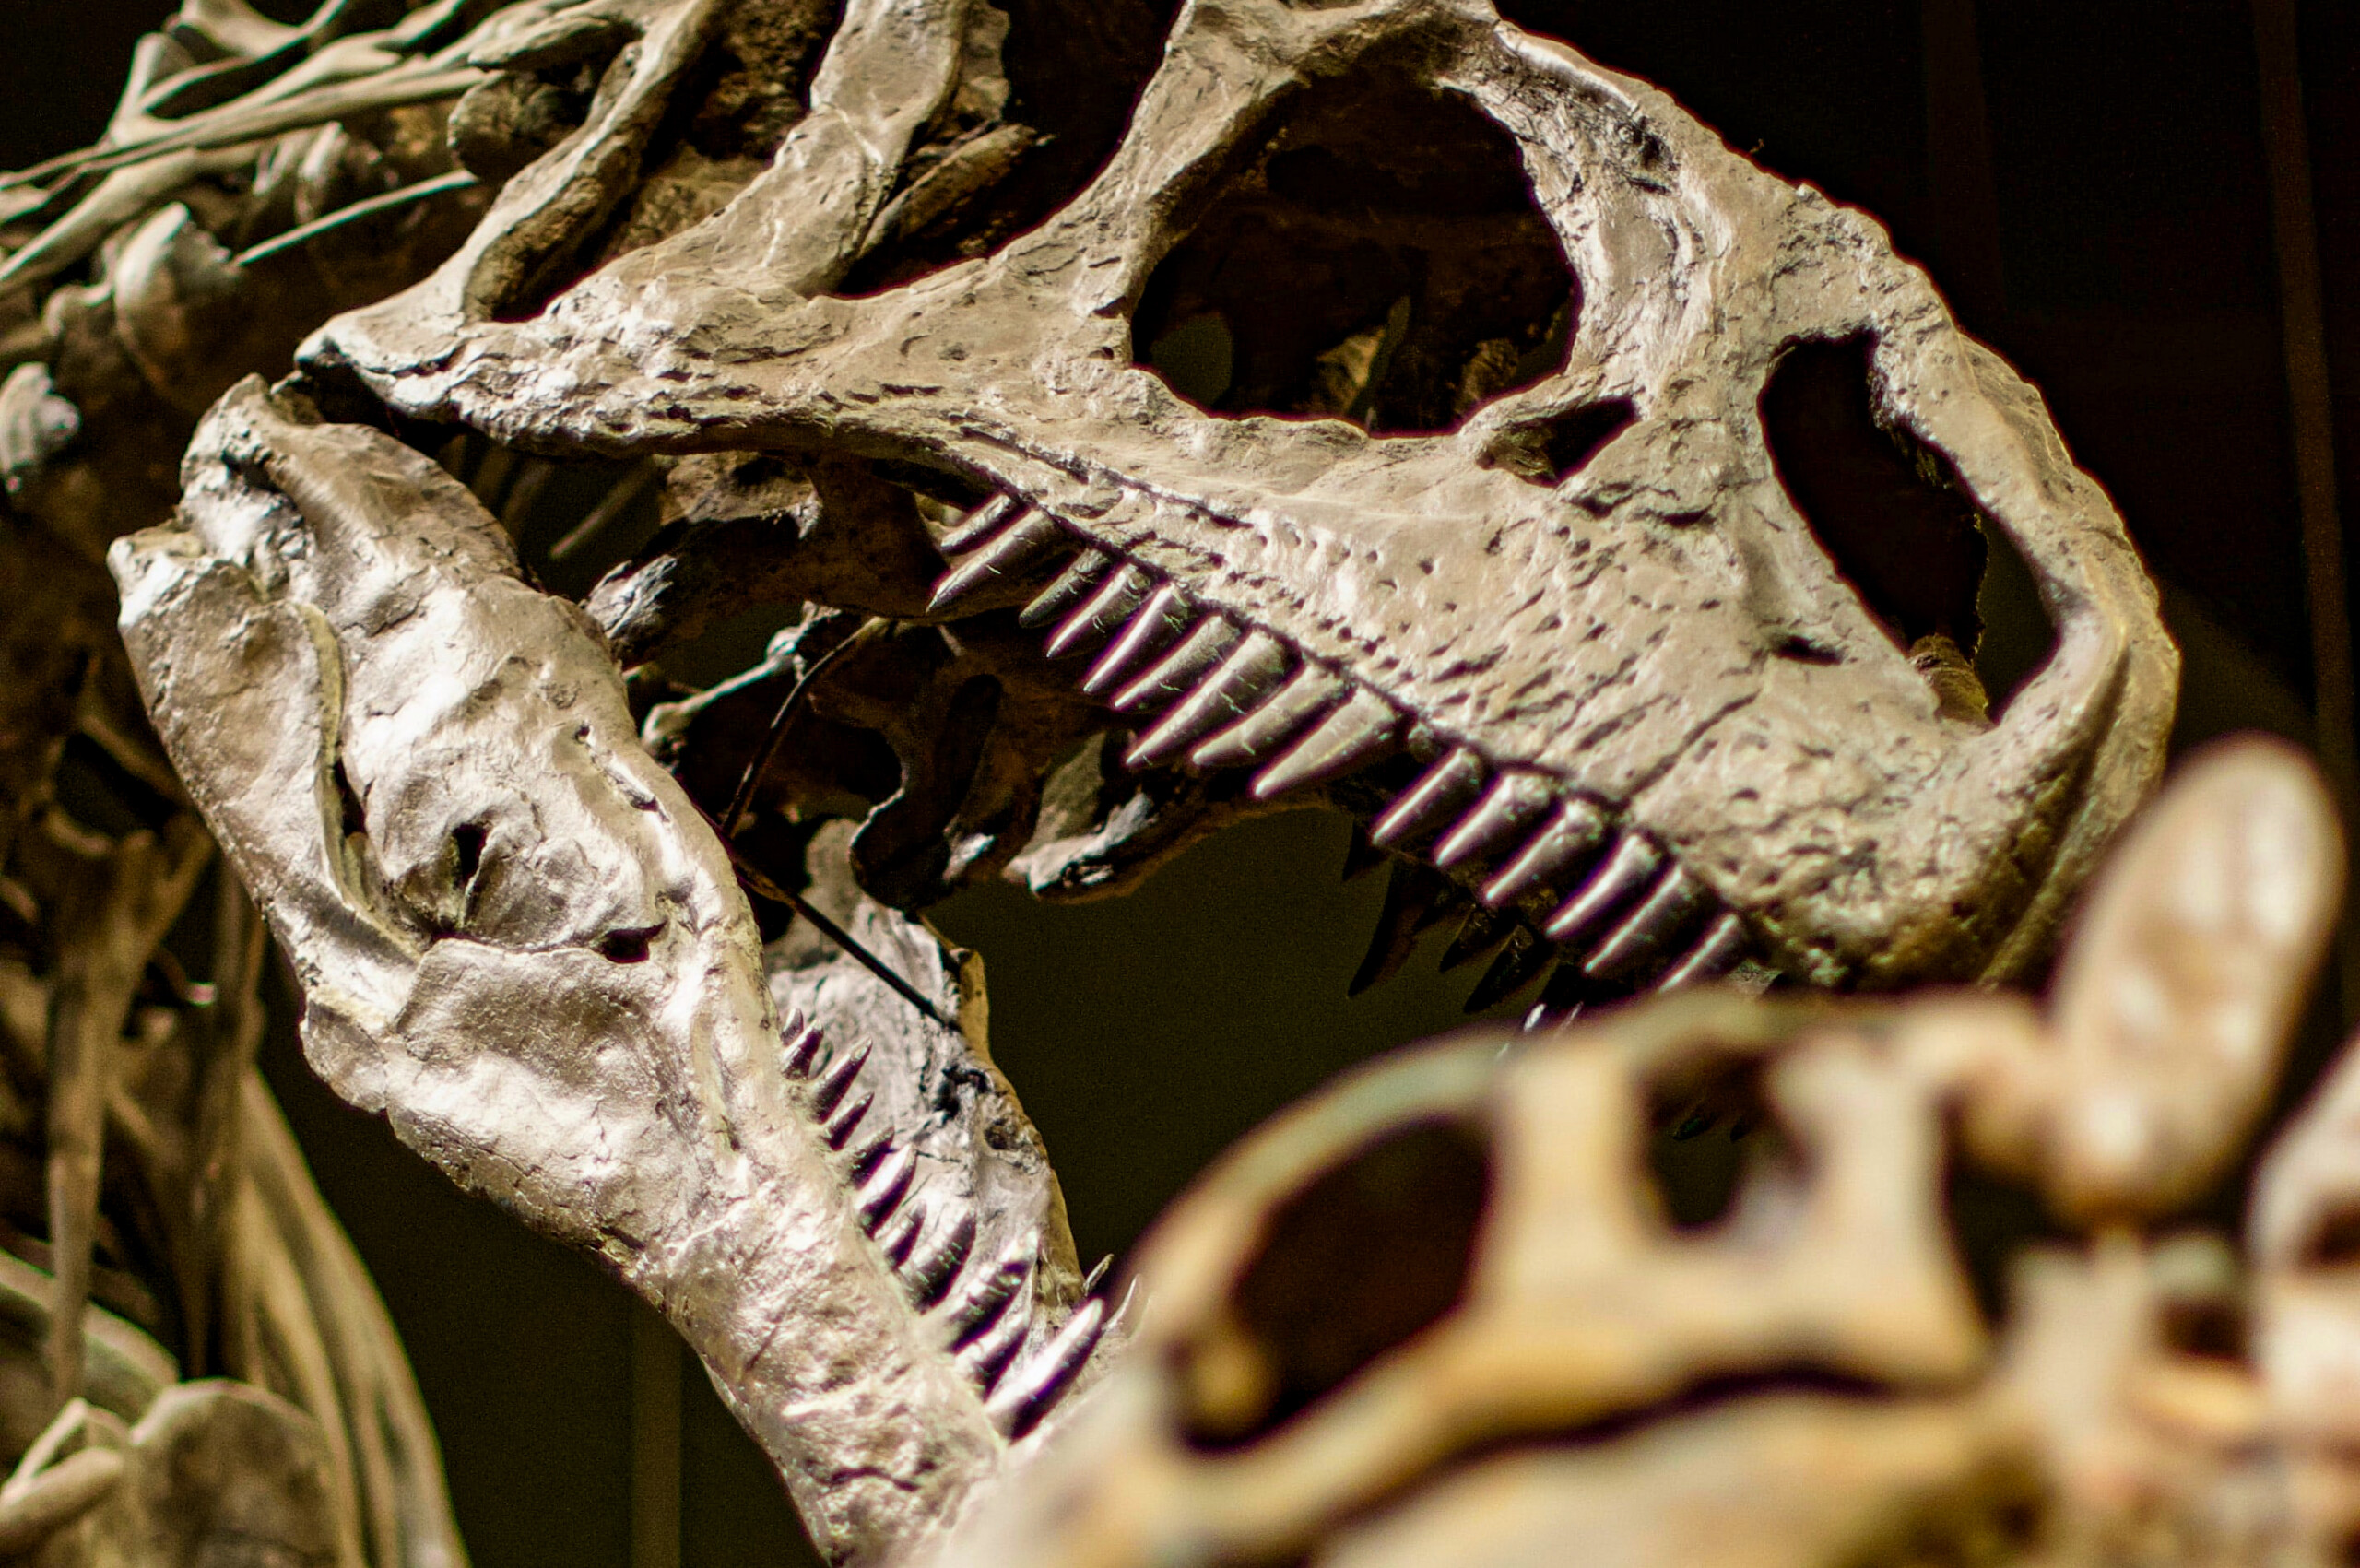 Dinosaur bones at the Denver Museum